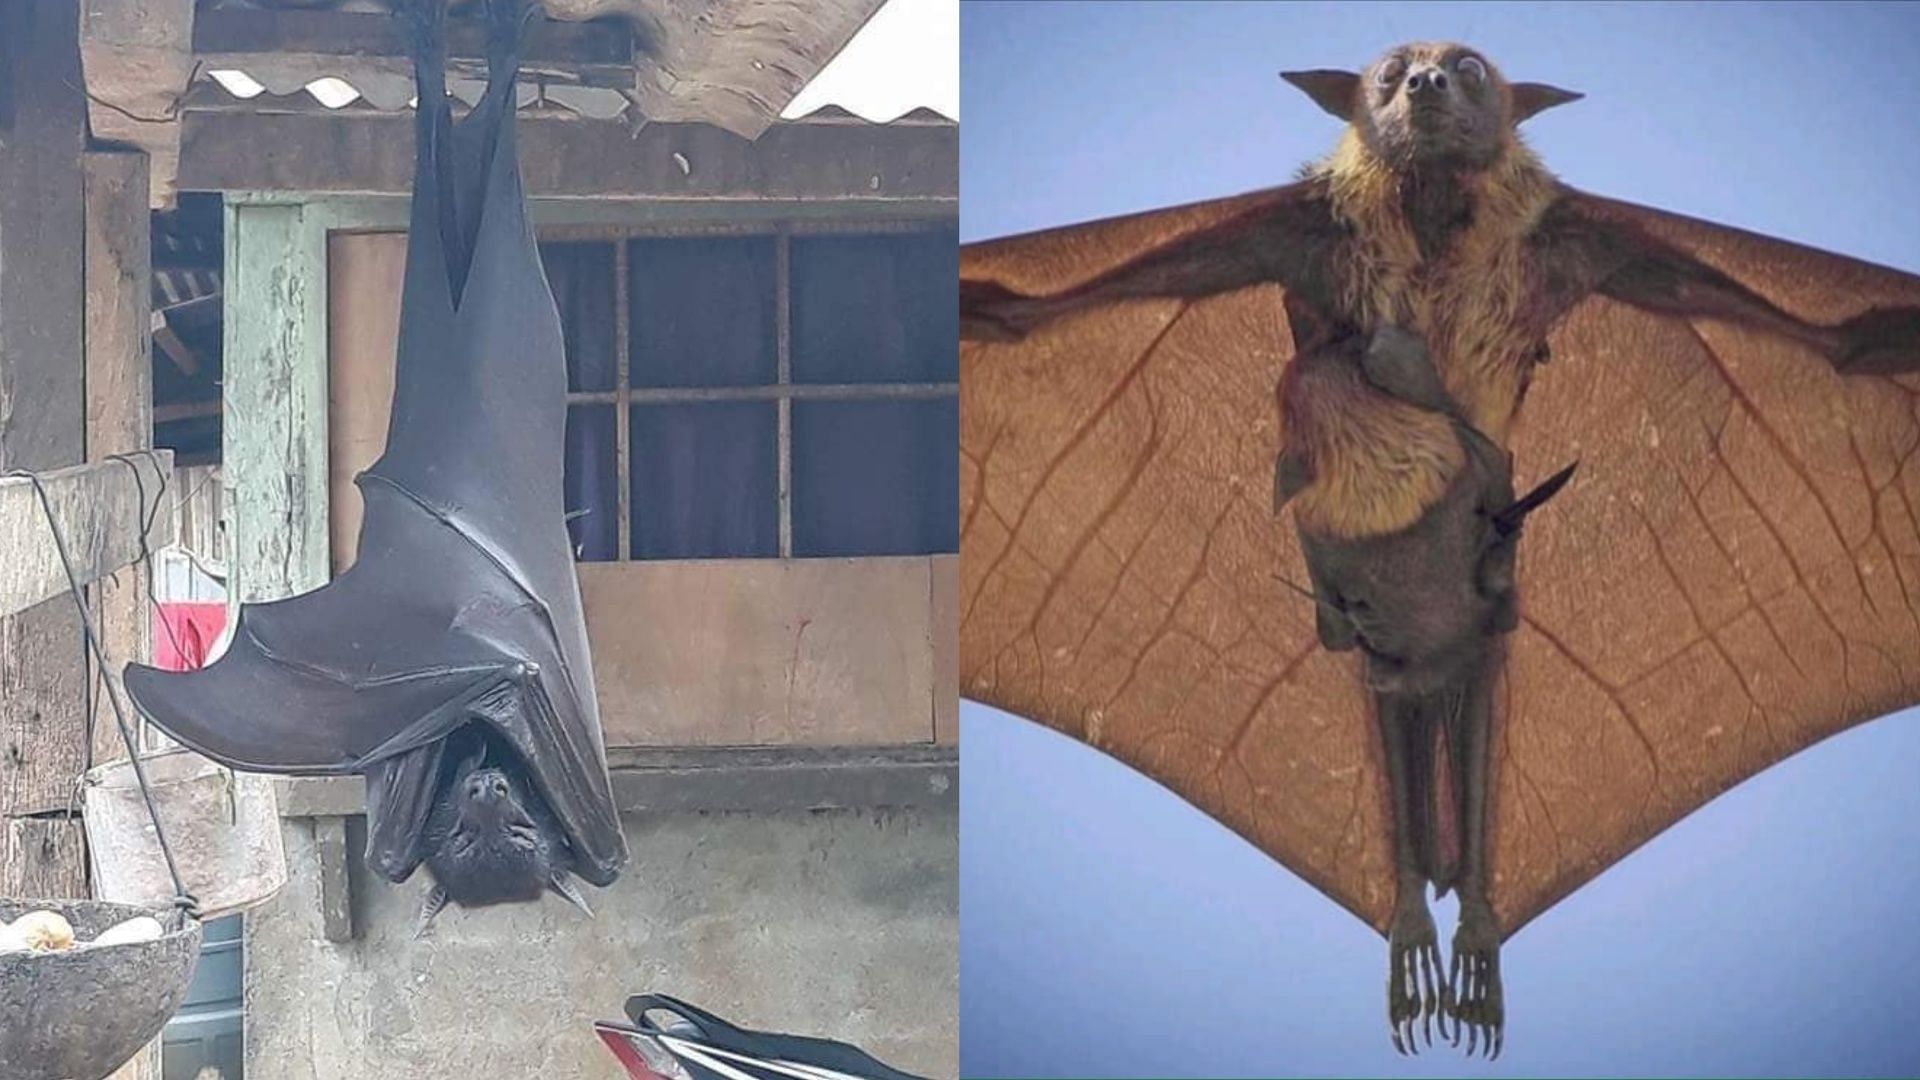 flying fox bat next to human